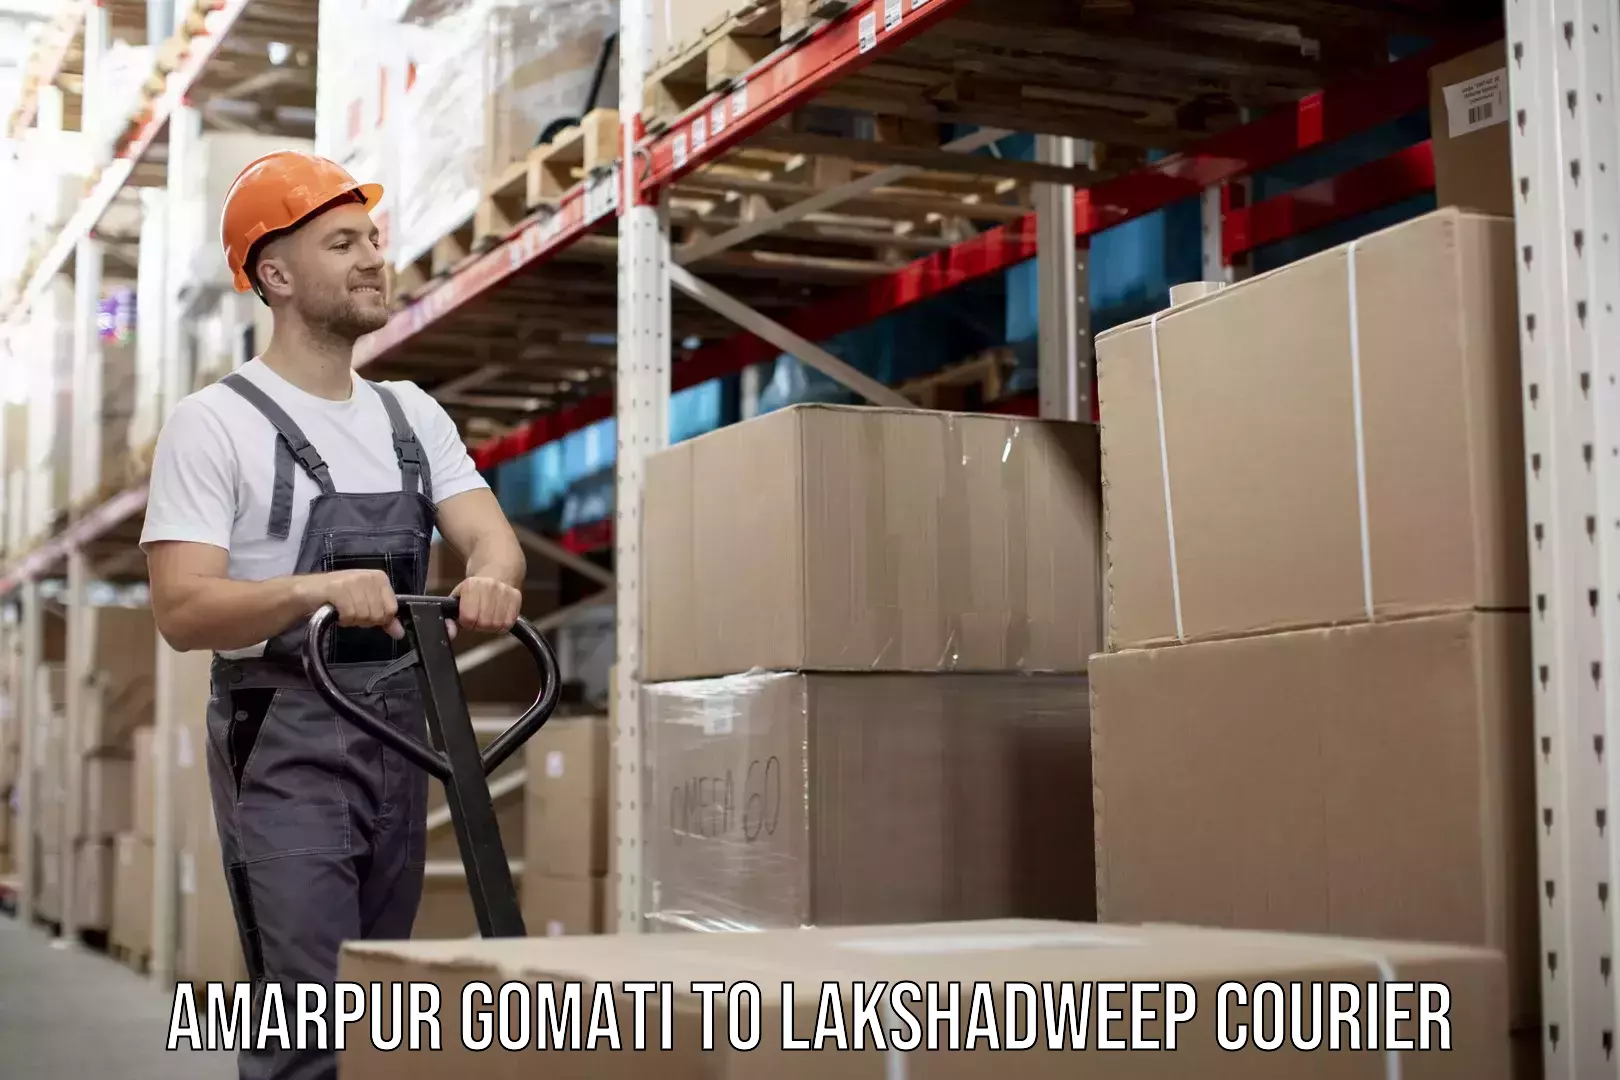 Bulk courier orders Amarpur Gomati to Lakshadweep